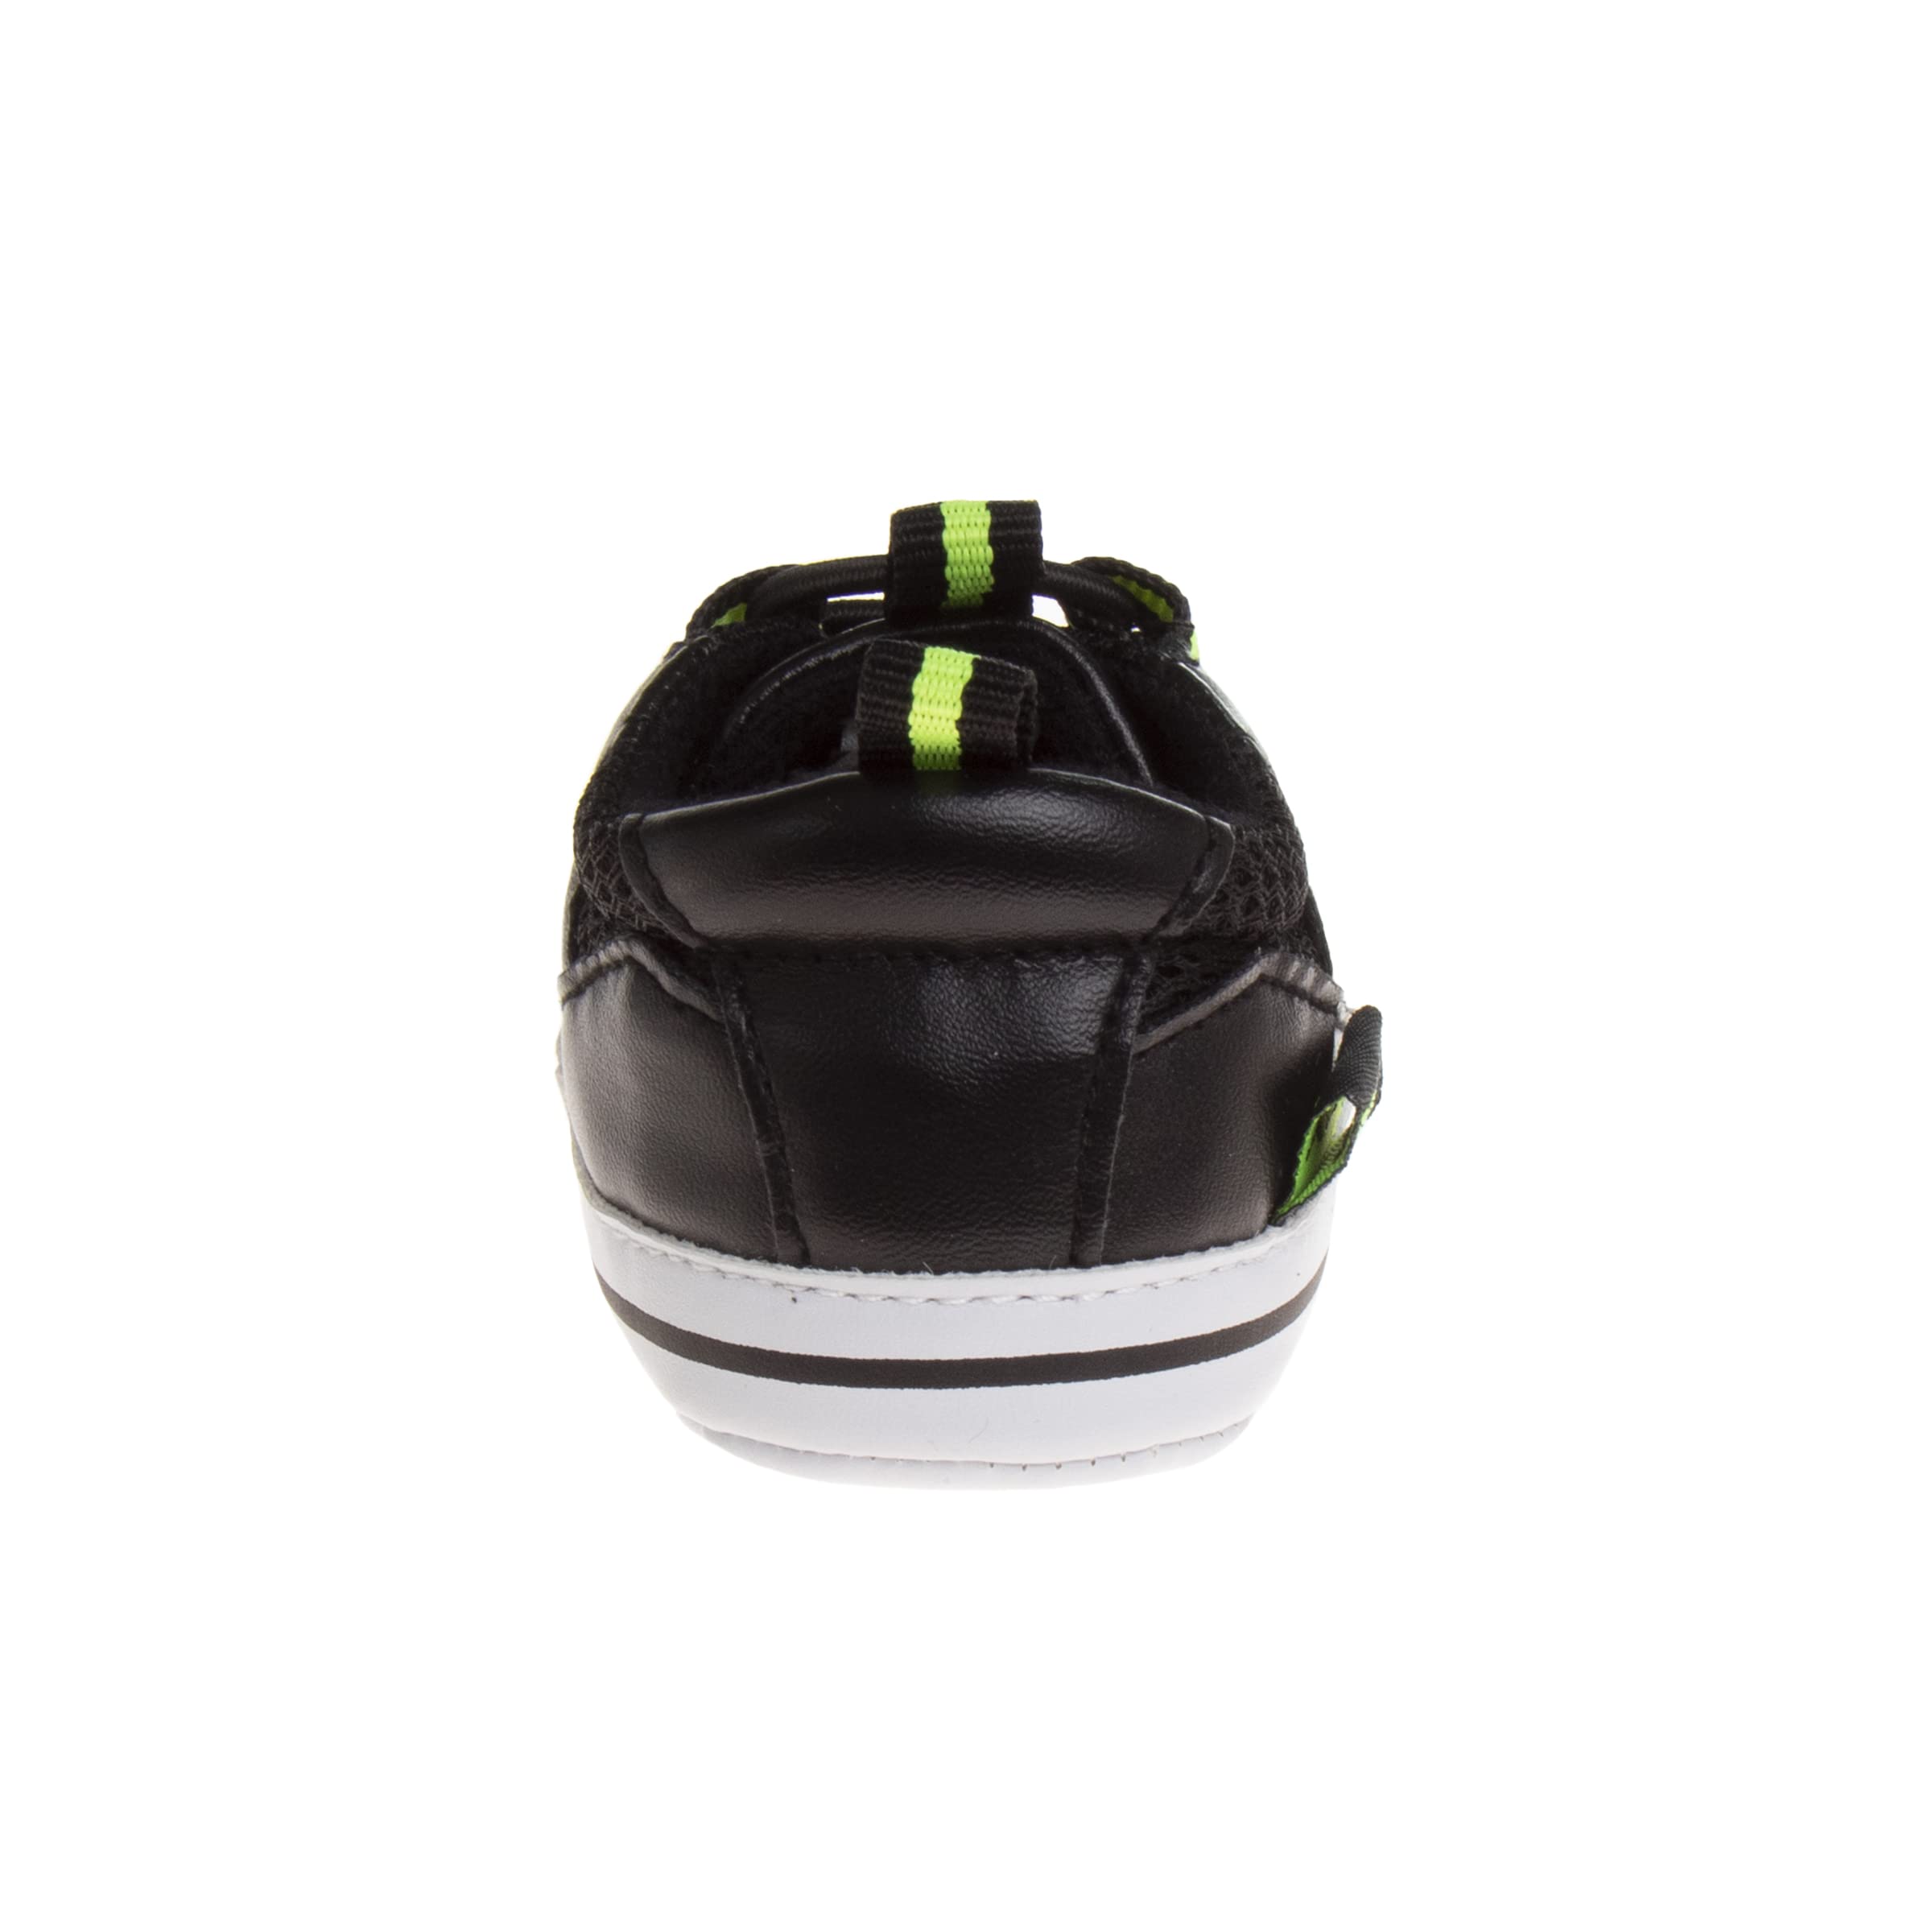 Josmo Unisex-Baby Newborn Crib Soft Sneakers 0-18 Month (Infant)